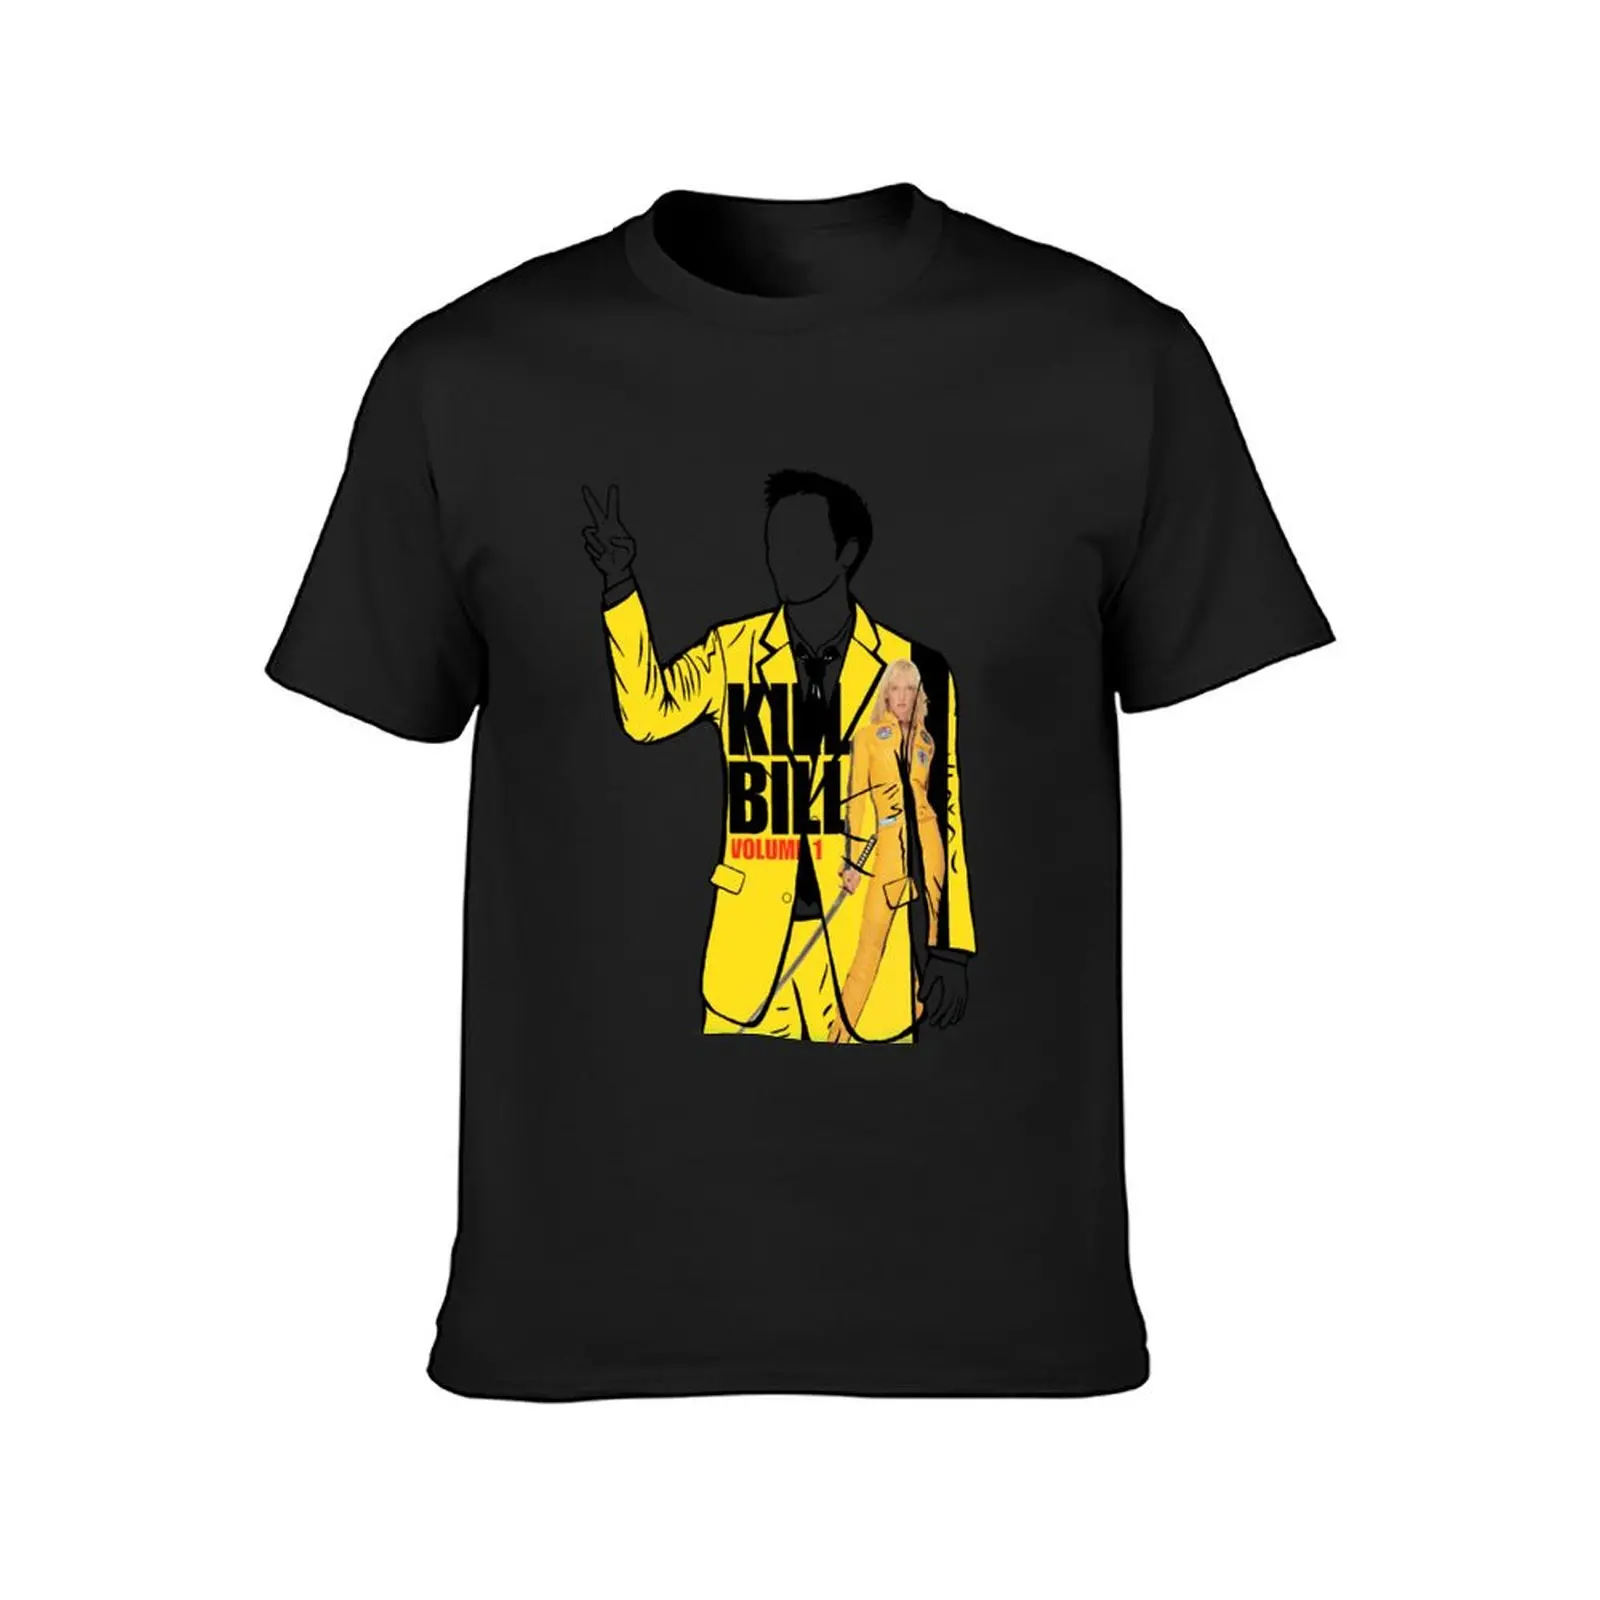 Quentin Tarantino, director of Kill Bill T-Shirt summer top hippie clothes mens t shirts casual stylish